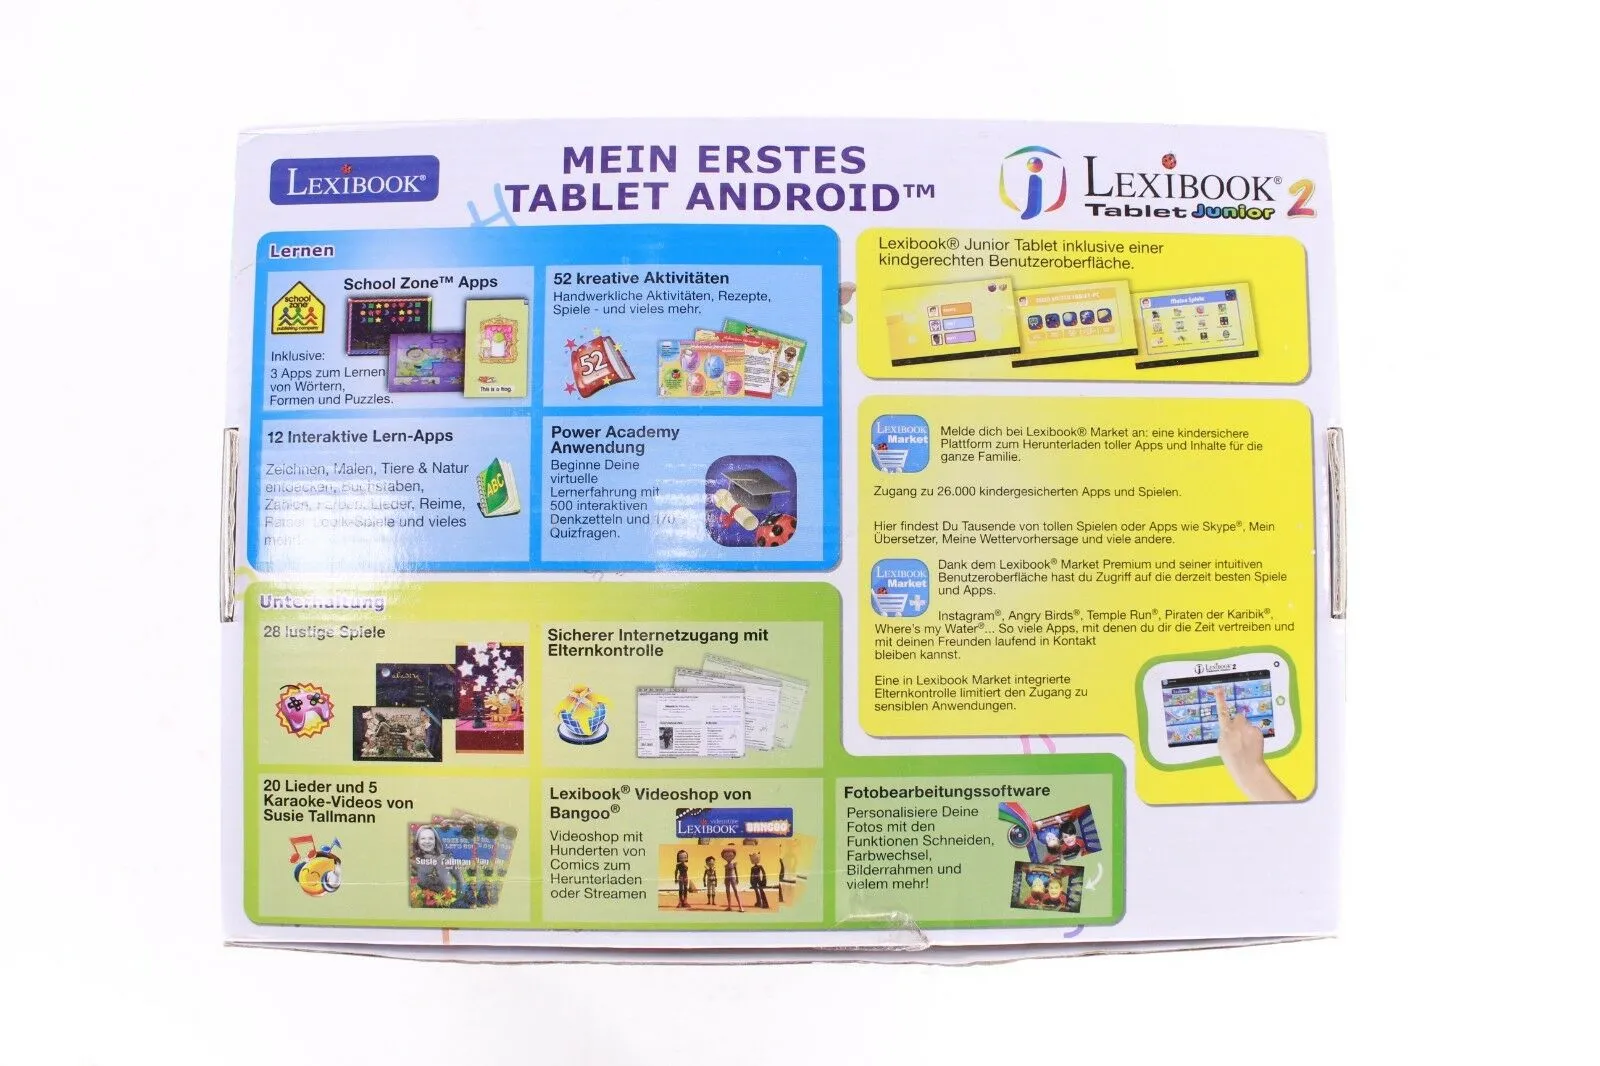 Lexibook Junior 2 - Моят първи Android таблет 3